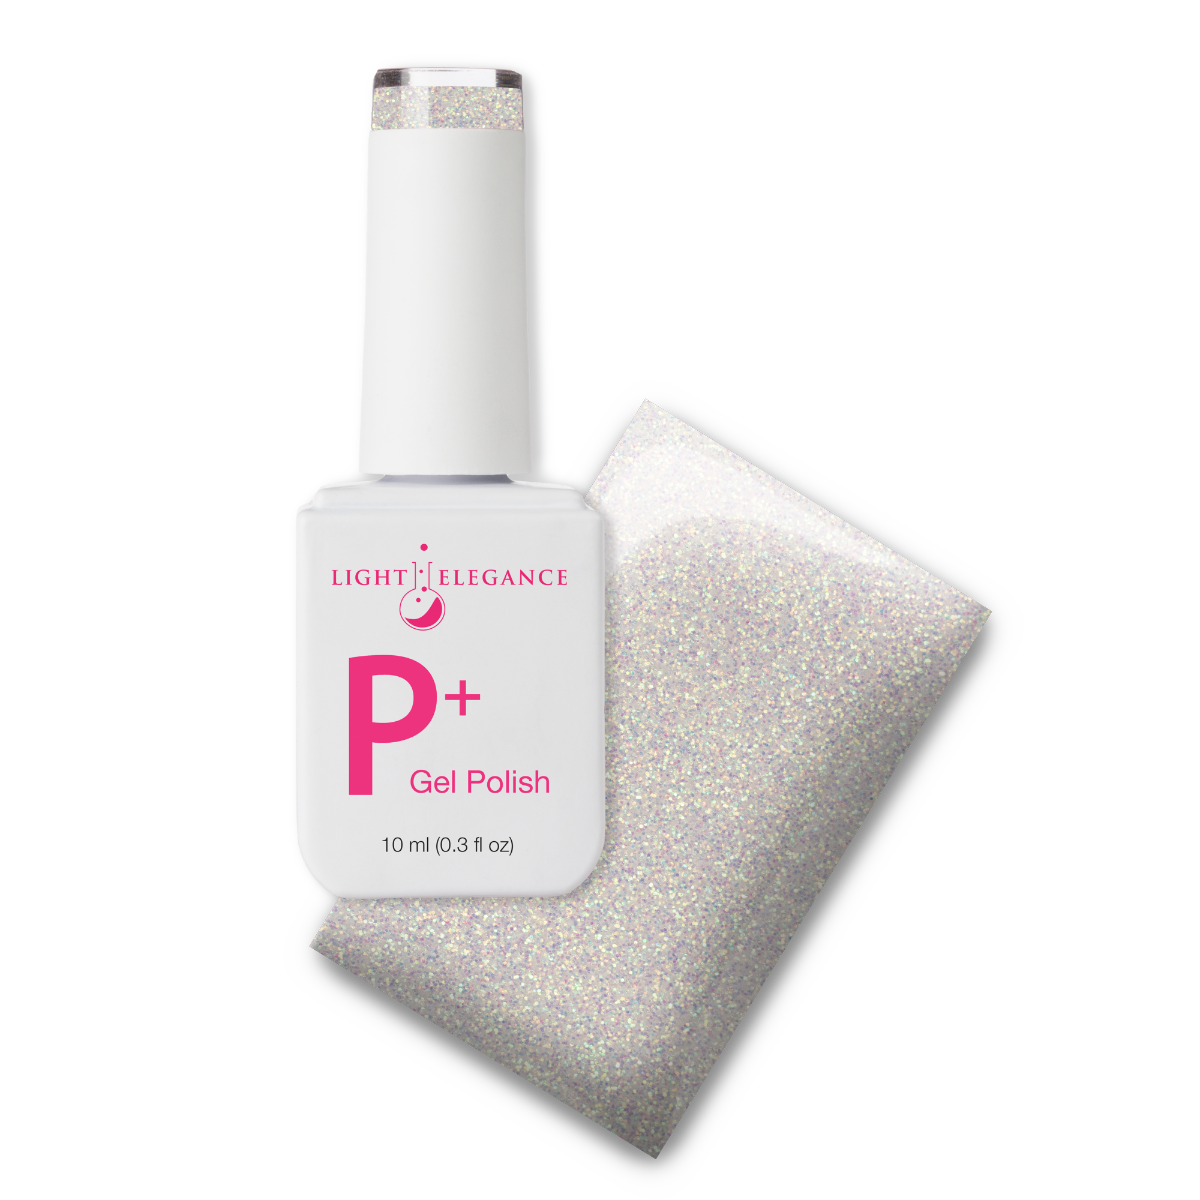 Light Elegance P+ Soak Off Glitter Gel - Go-Go Boots :: New Packaging